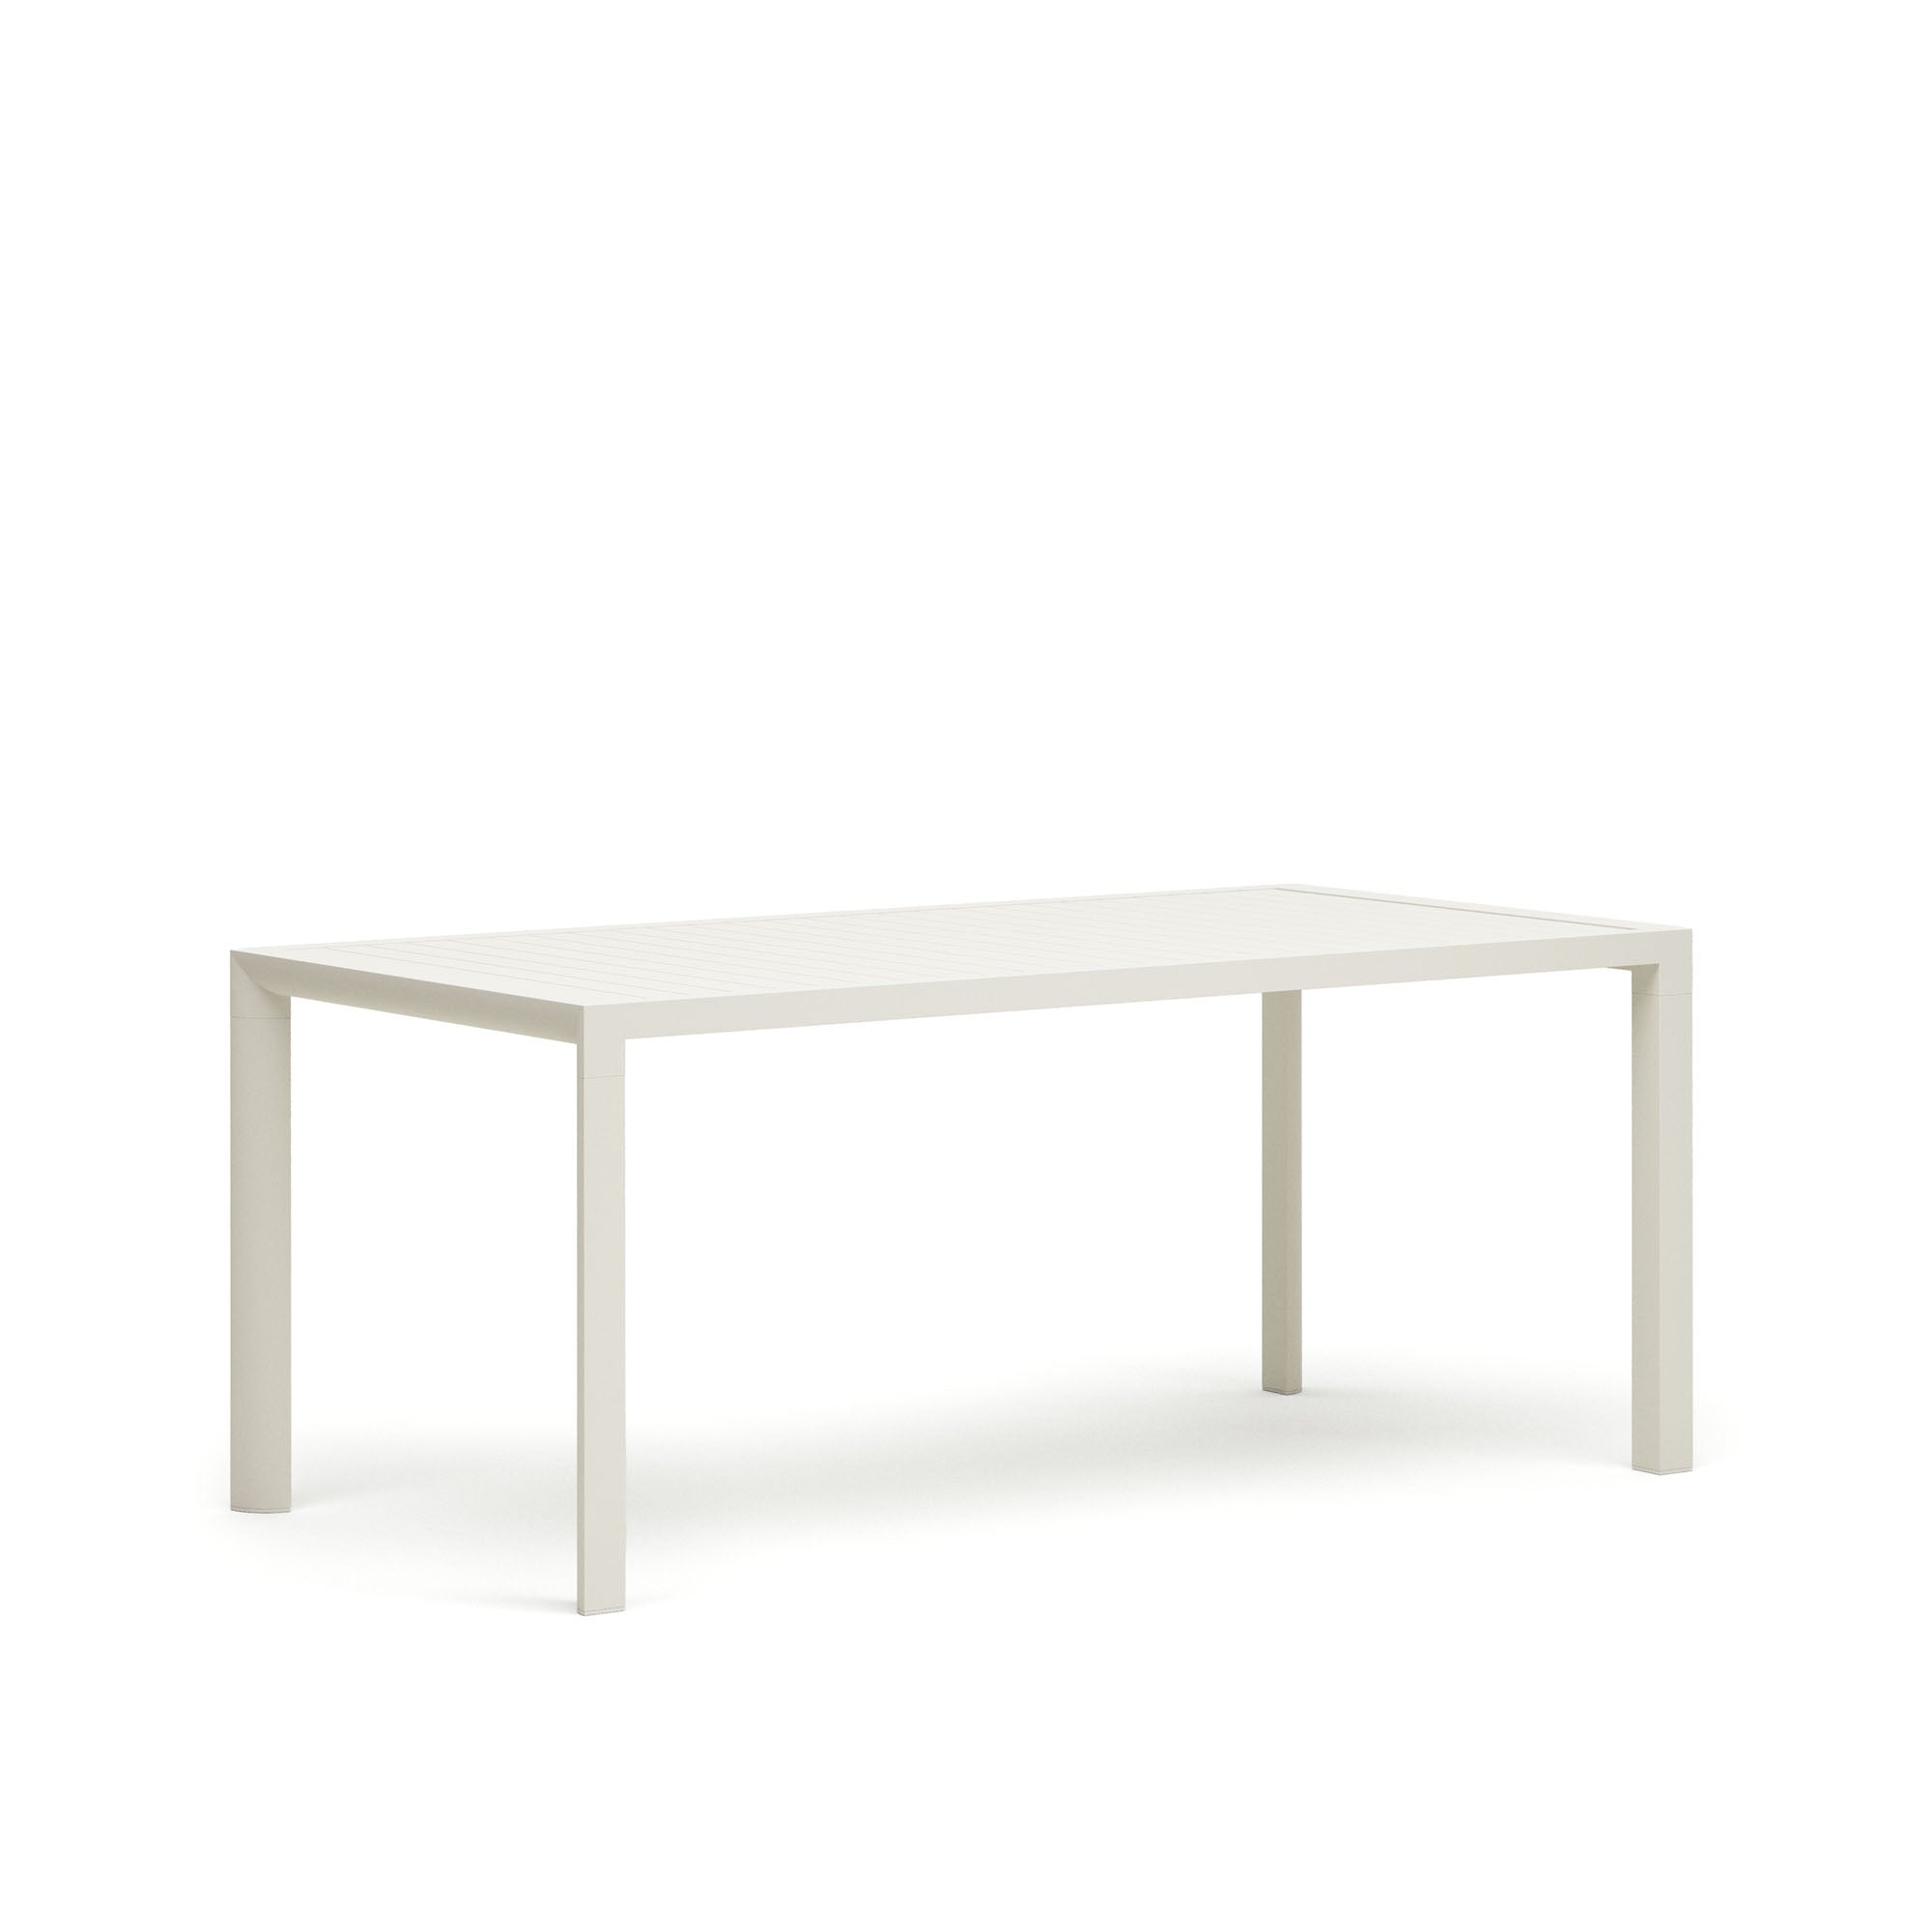 Culip aluminium outdoor table with white finish, 180 x 90 cm